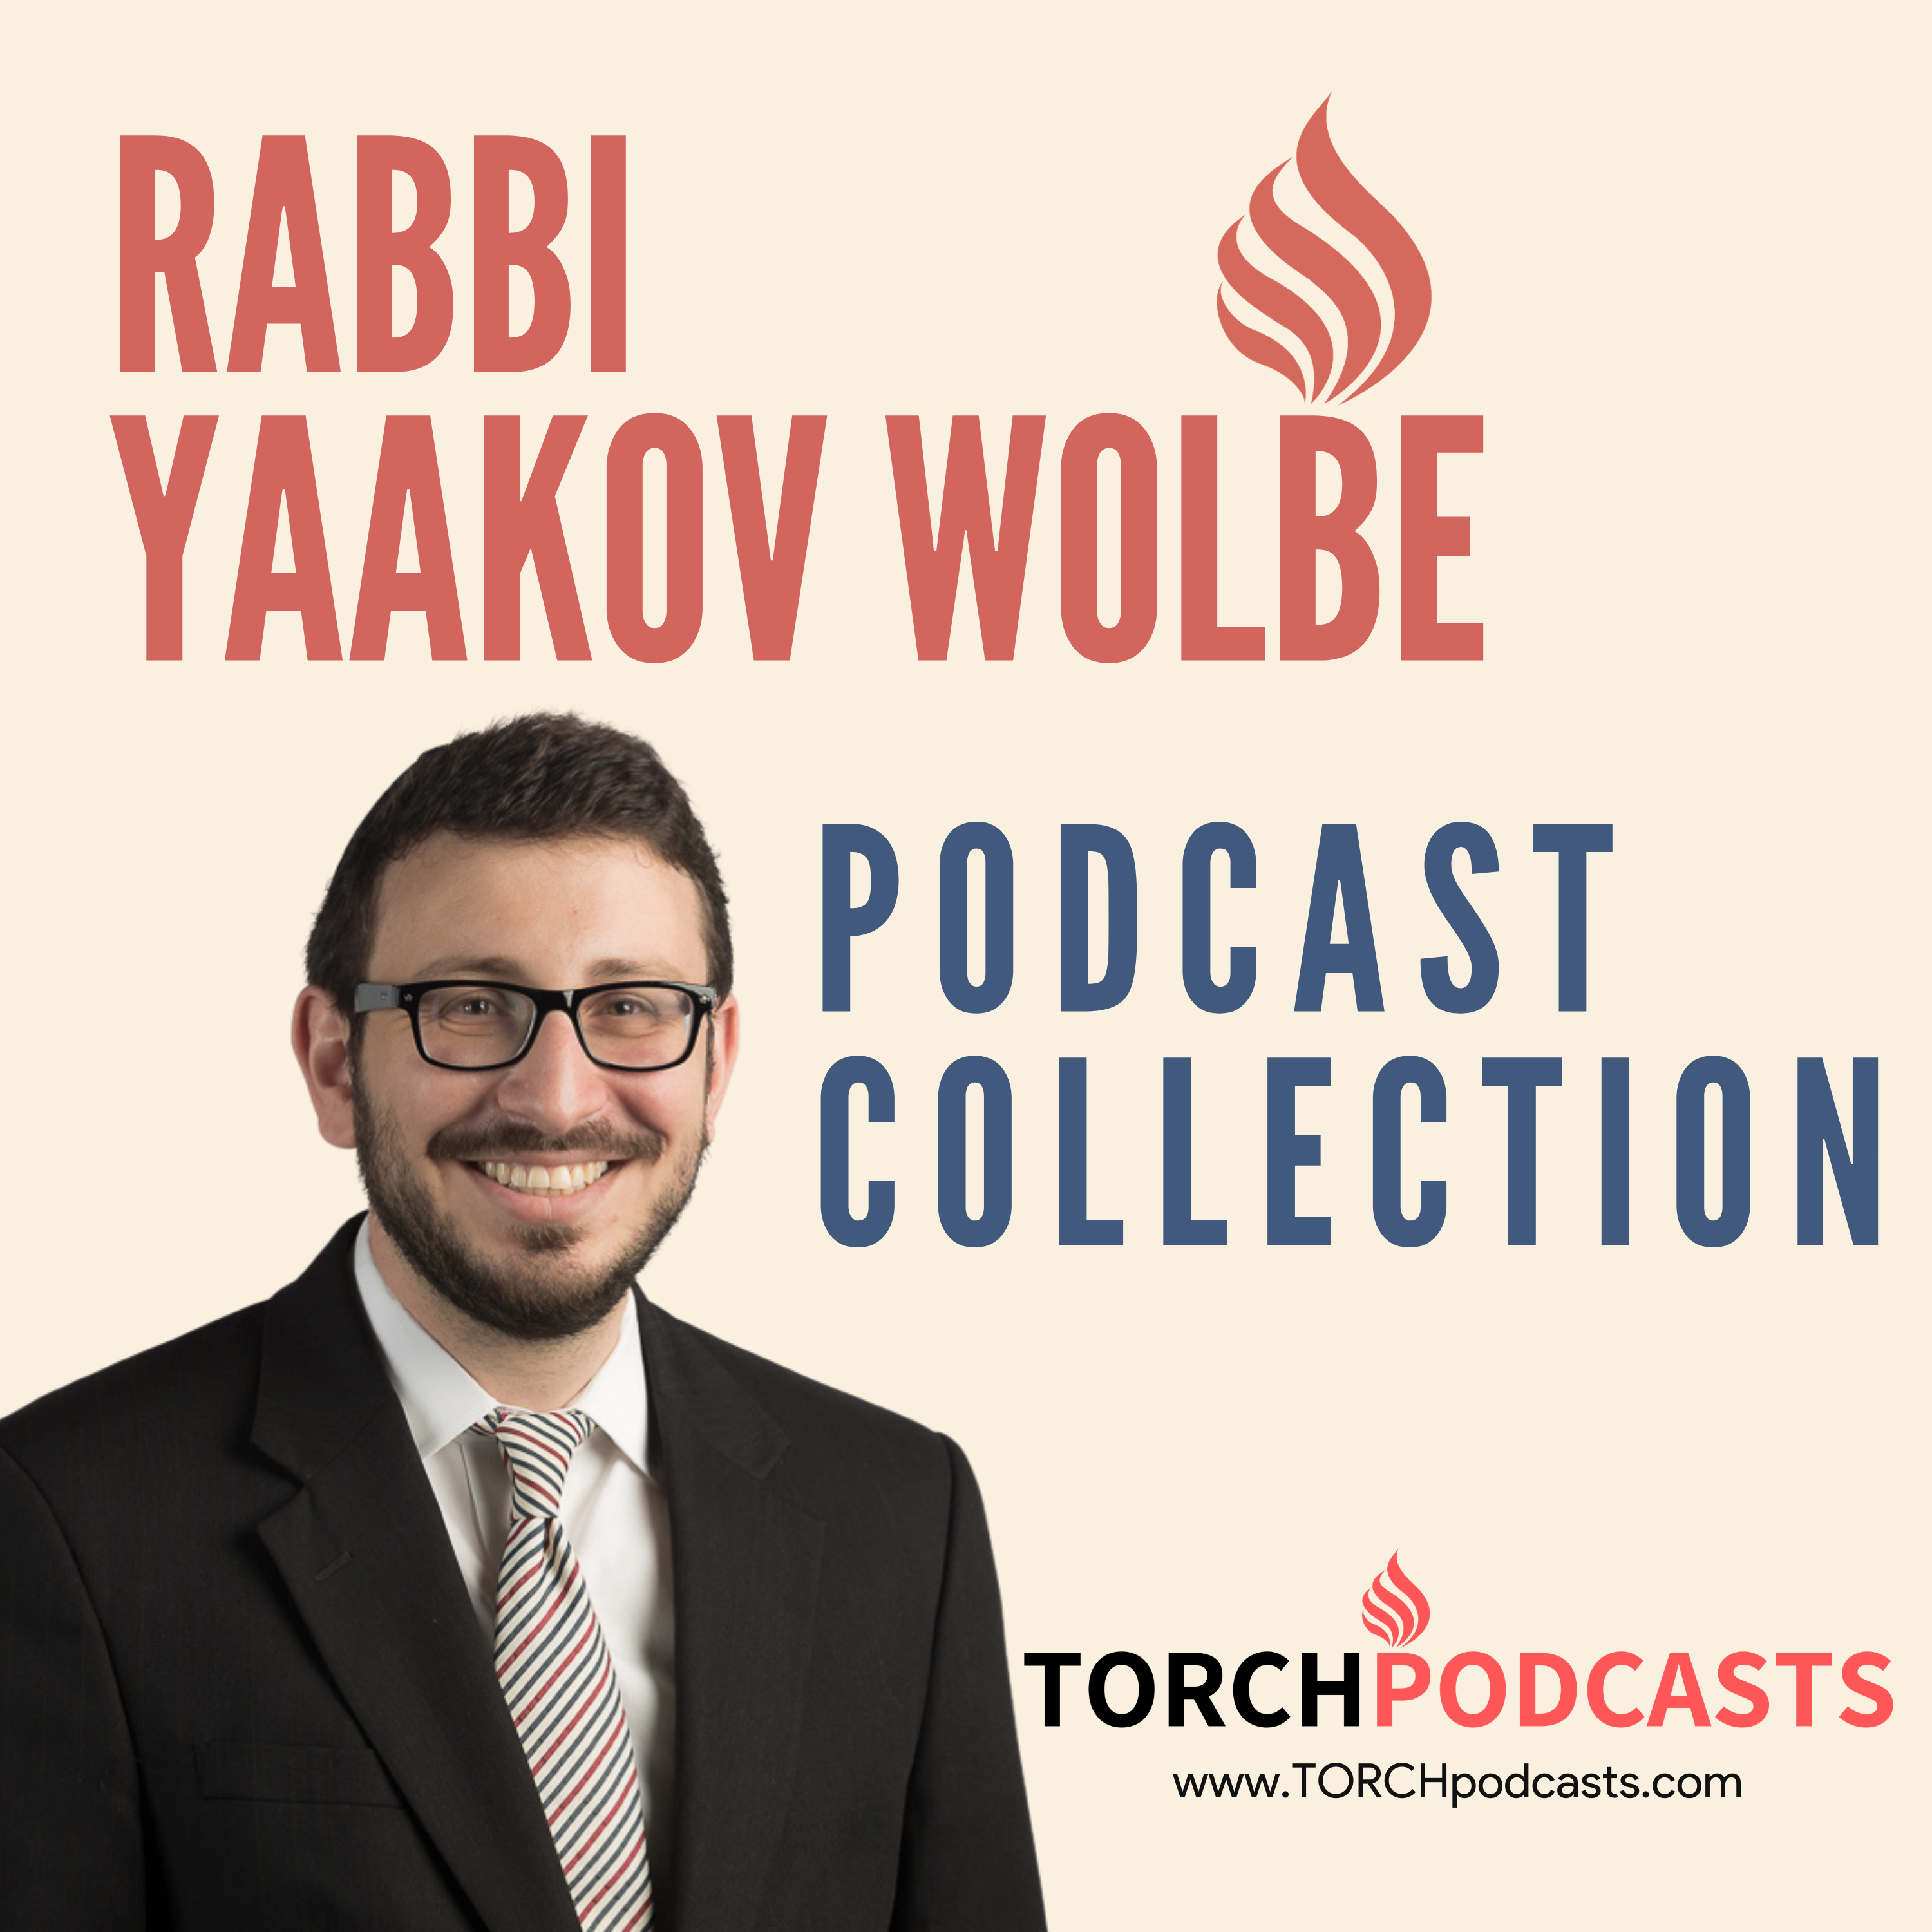 All Rabbi Yaakov Wolbe Podcasts